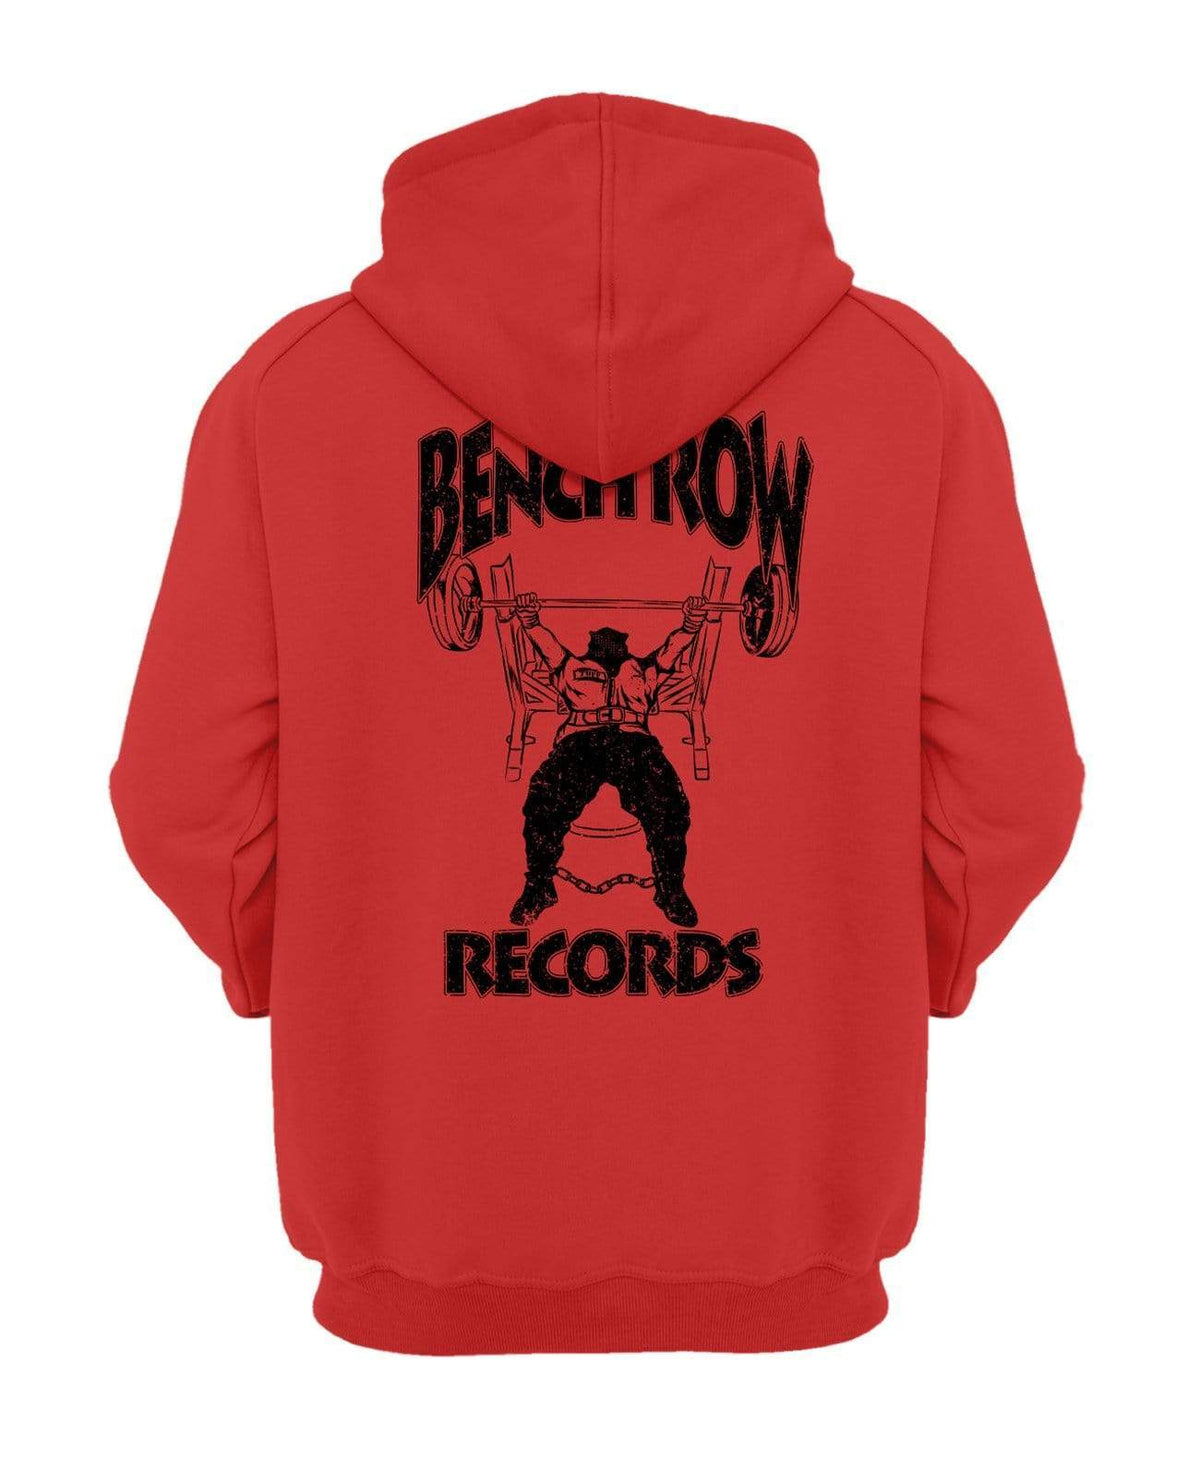 Bench Row Records Hooded Sweatshirt XS / Red TuffWraps.com